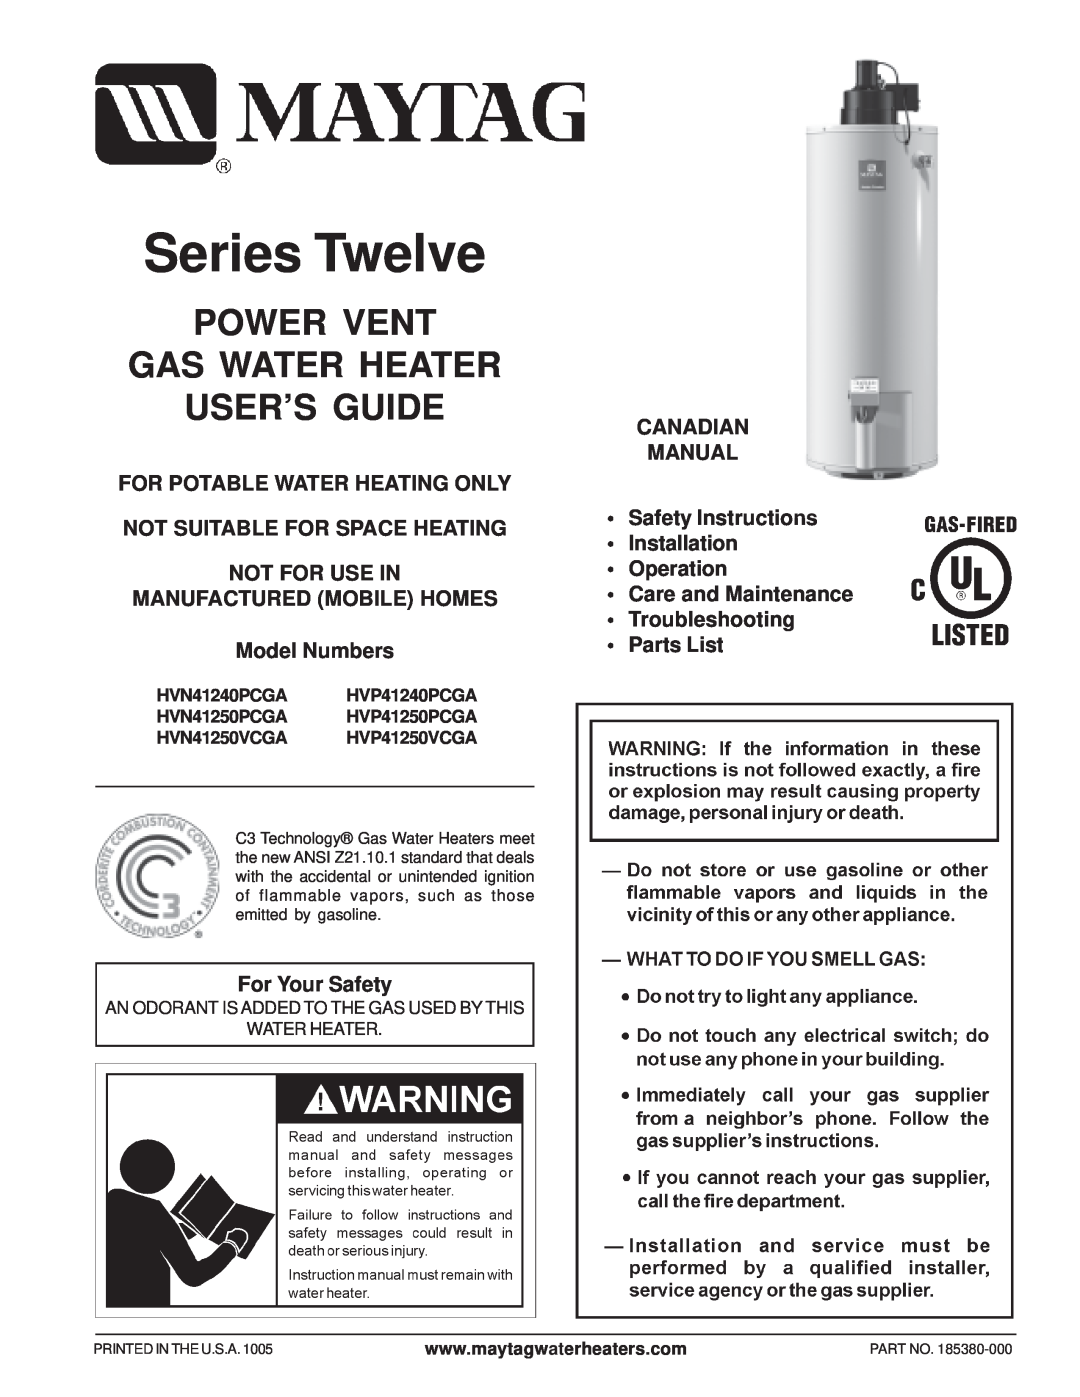 Maytag HVN41250PCGA, HVN41250VCGA, HVN41240PCGA, HVP41250PCGA manual Series Twelve, Power Vent Gas Water Heater User’S Guide 